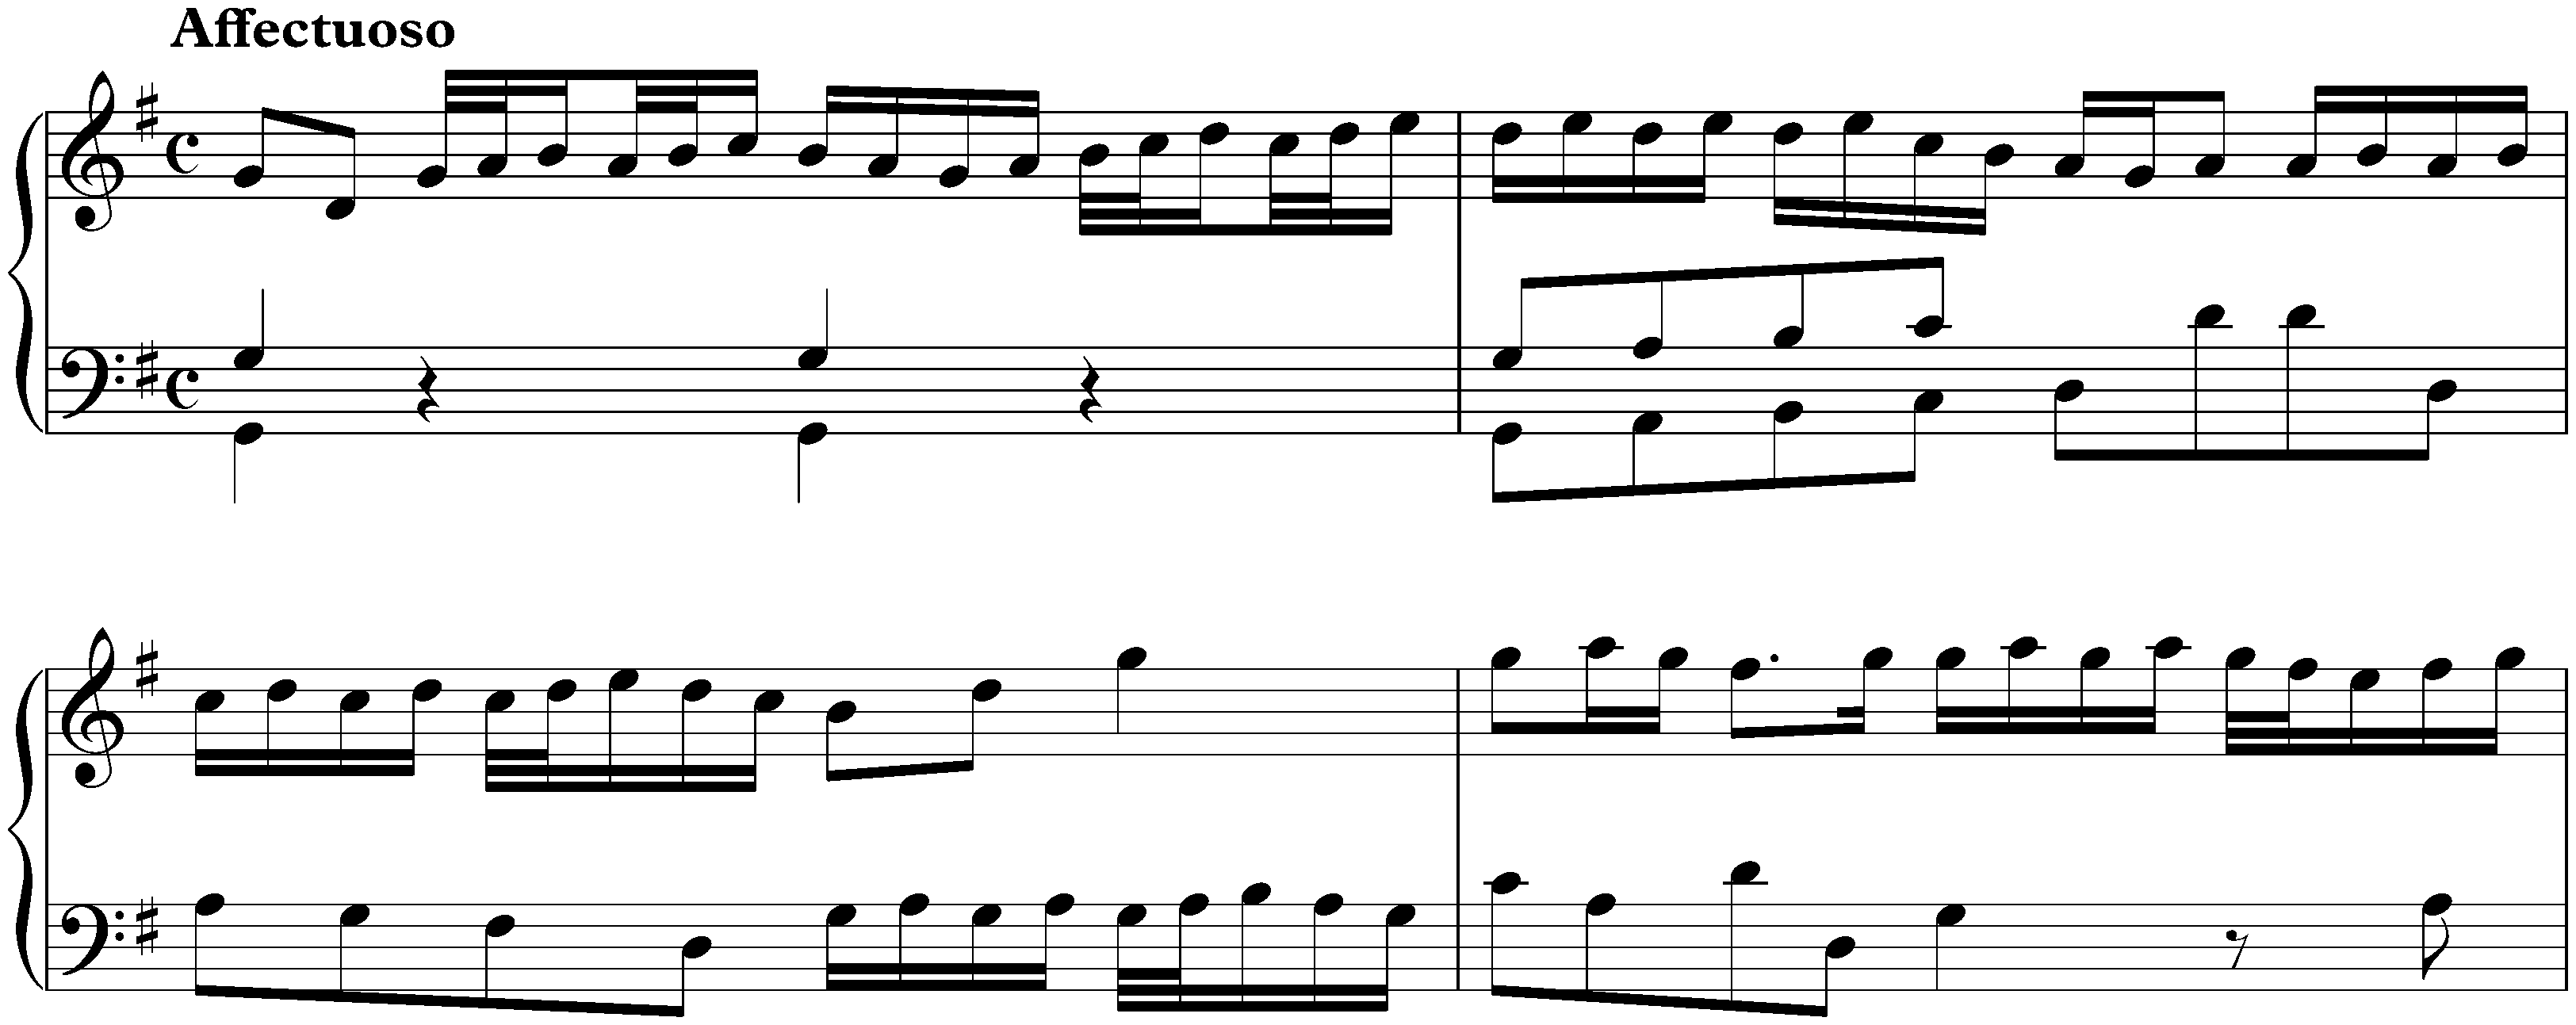 Concerto in G major, BWV Anh. 152; 1. Affectuoso